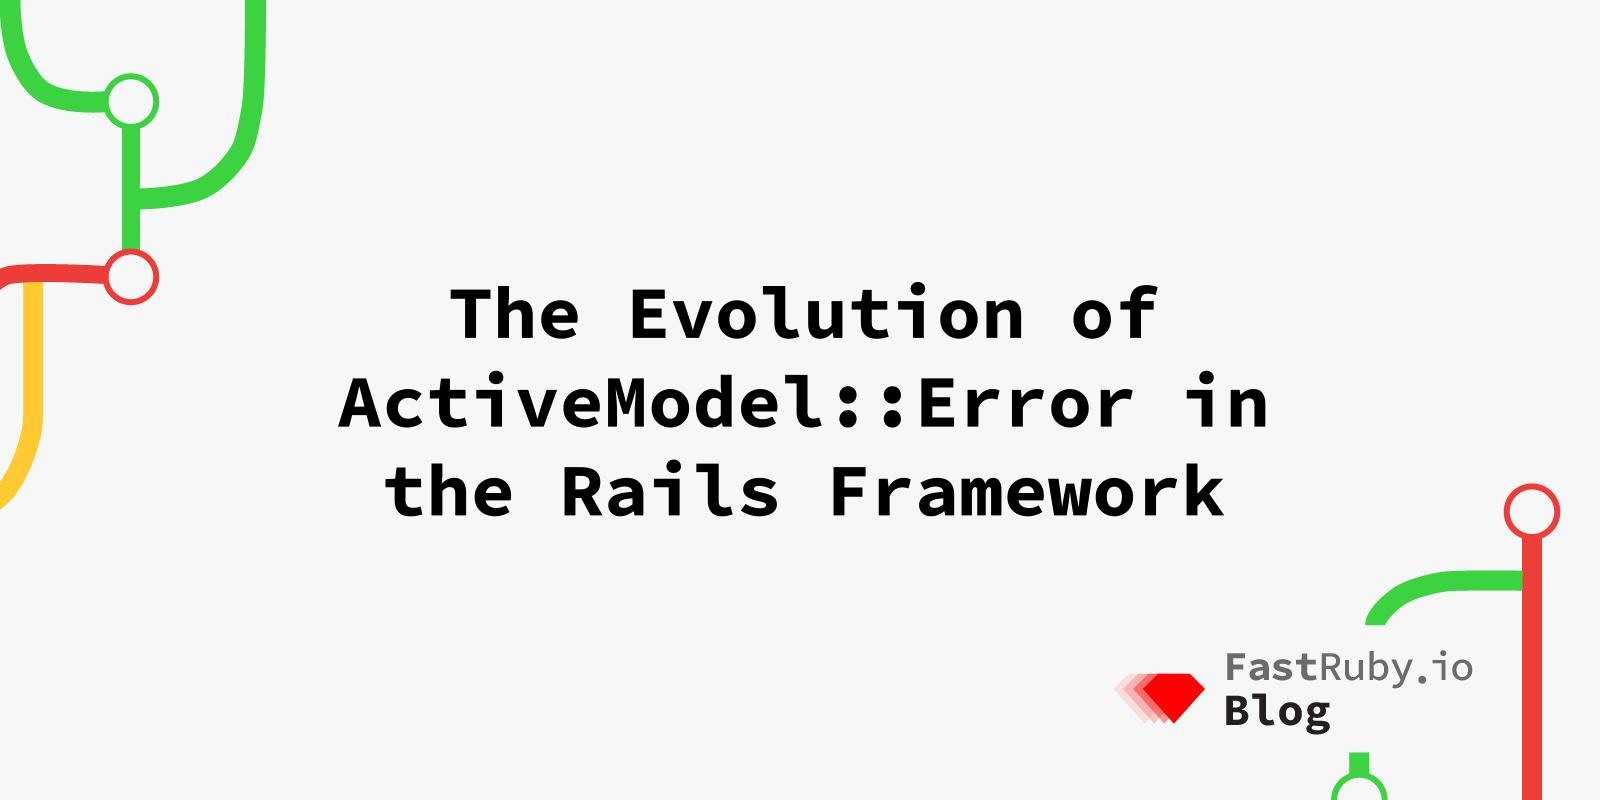 The Evolution of ActiveModel::Error in the Rails Framework